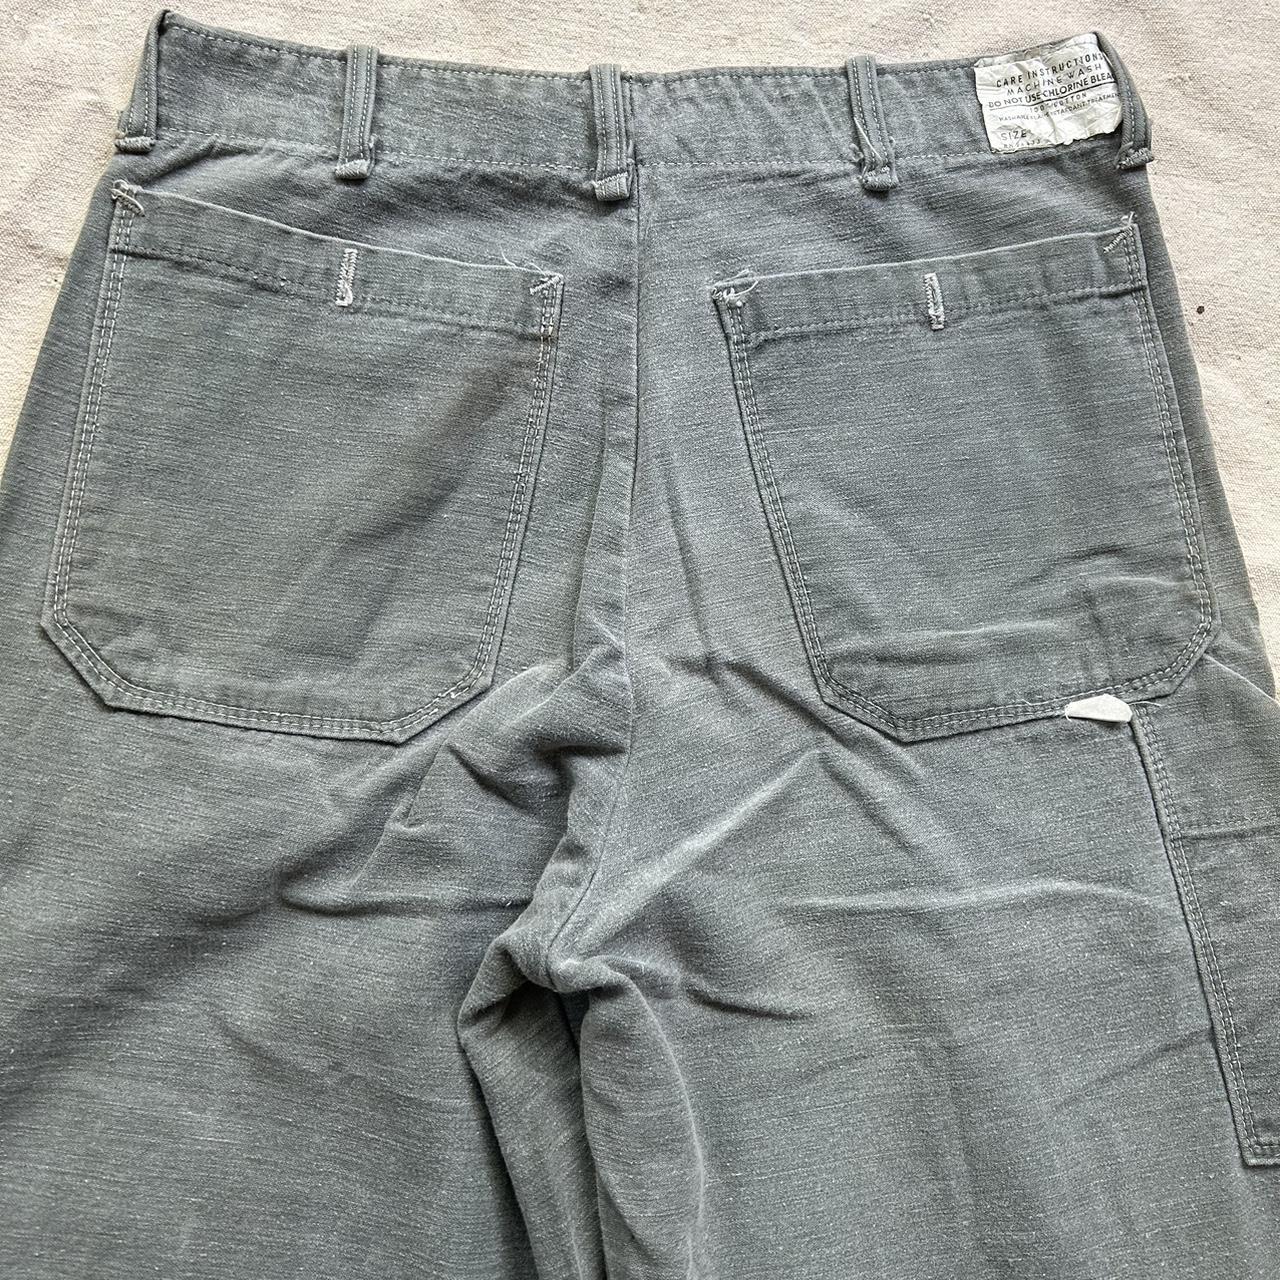 Vintage 70’s utility pants Thick cotton. Some... - Depop